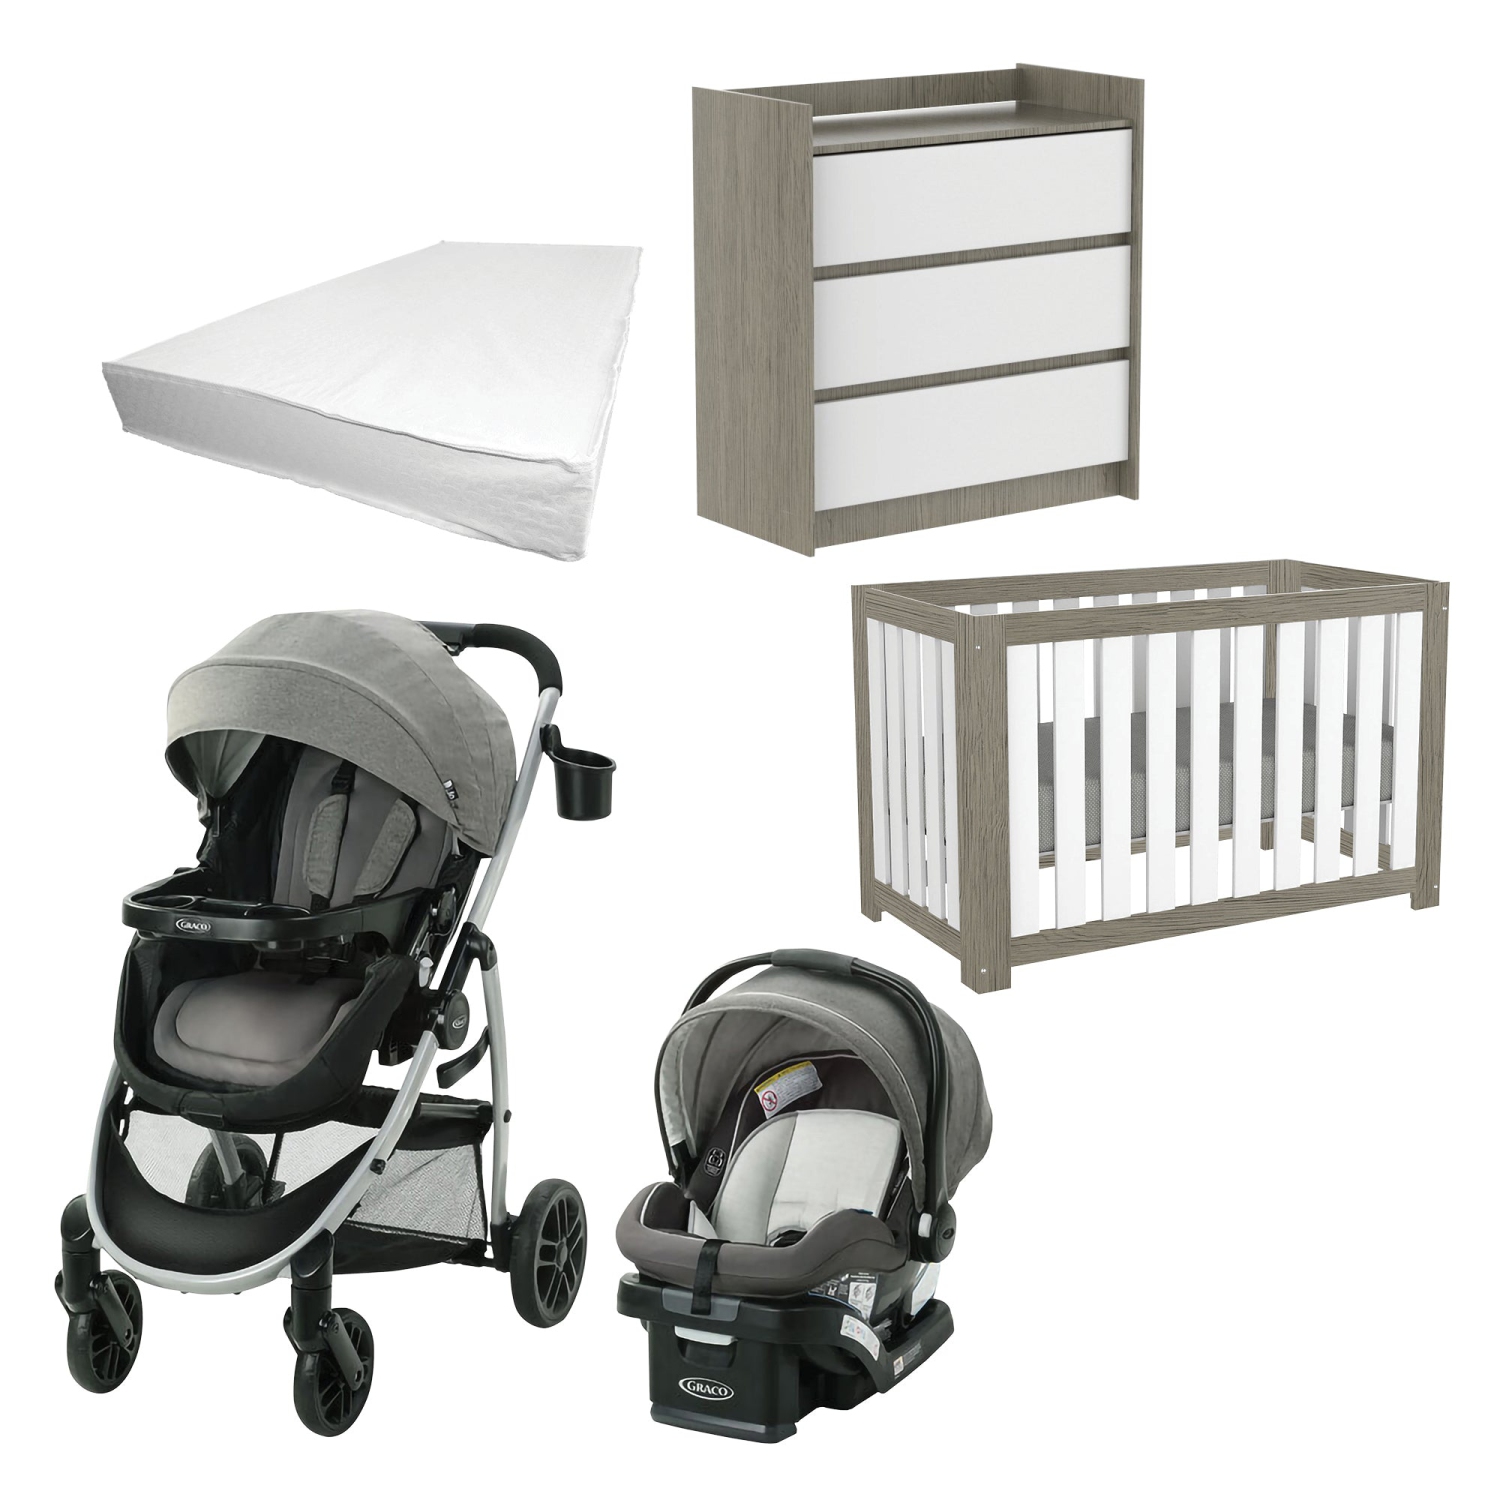 Nursery bundles graco modes travel system | boobeyeh baby crib | boobeyeh changing table | baby mattress